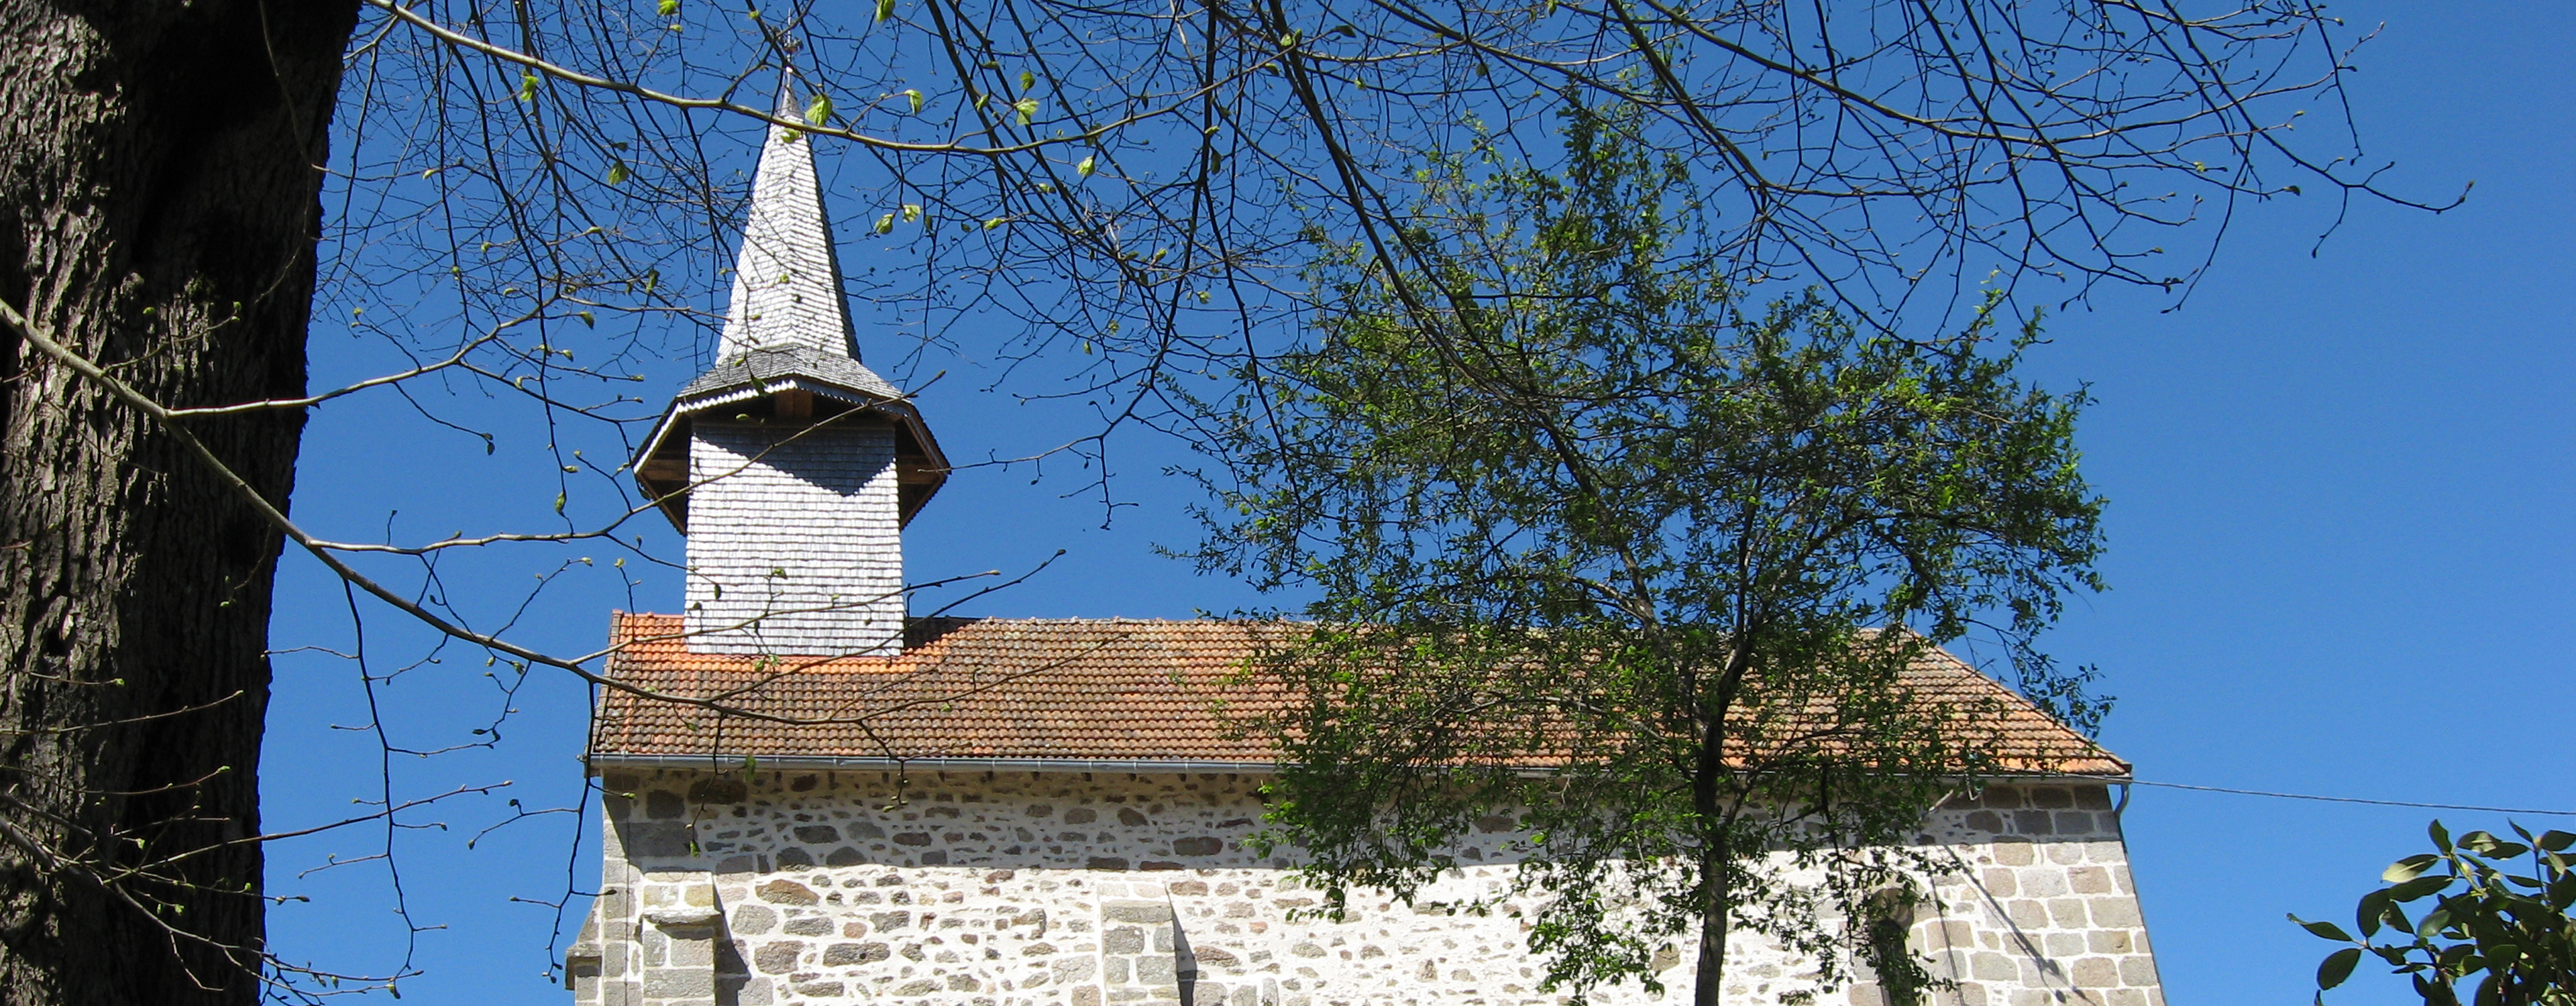 View of church at Etang de Azat-Chatenet fishing lake in France